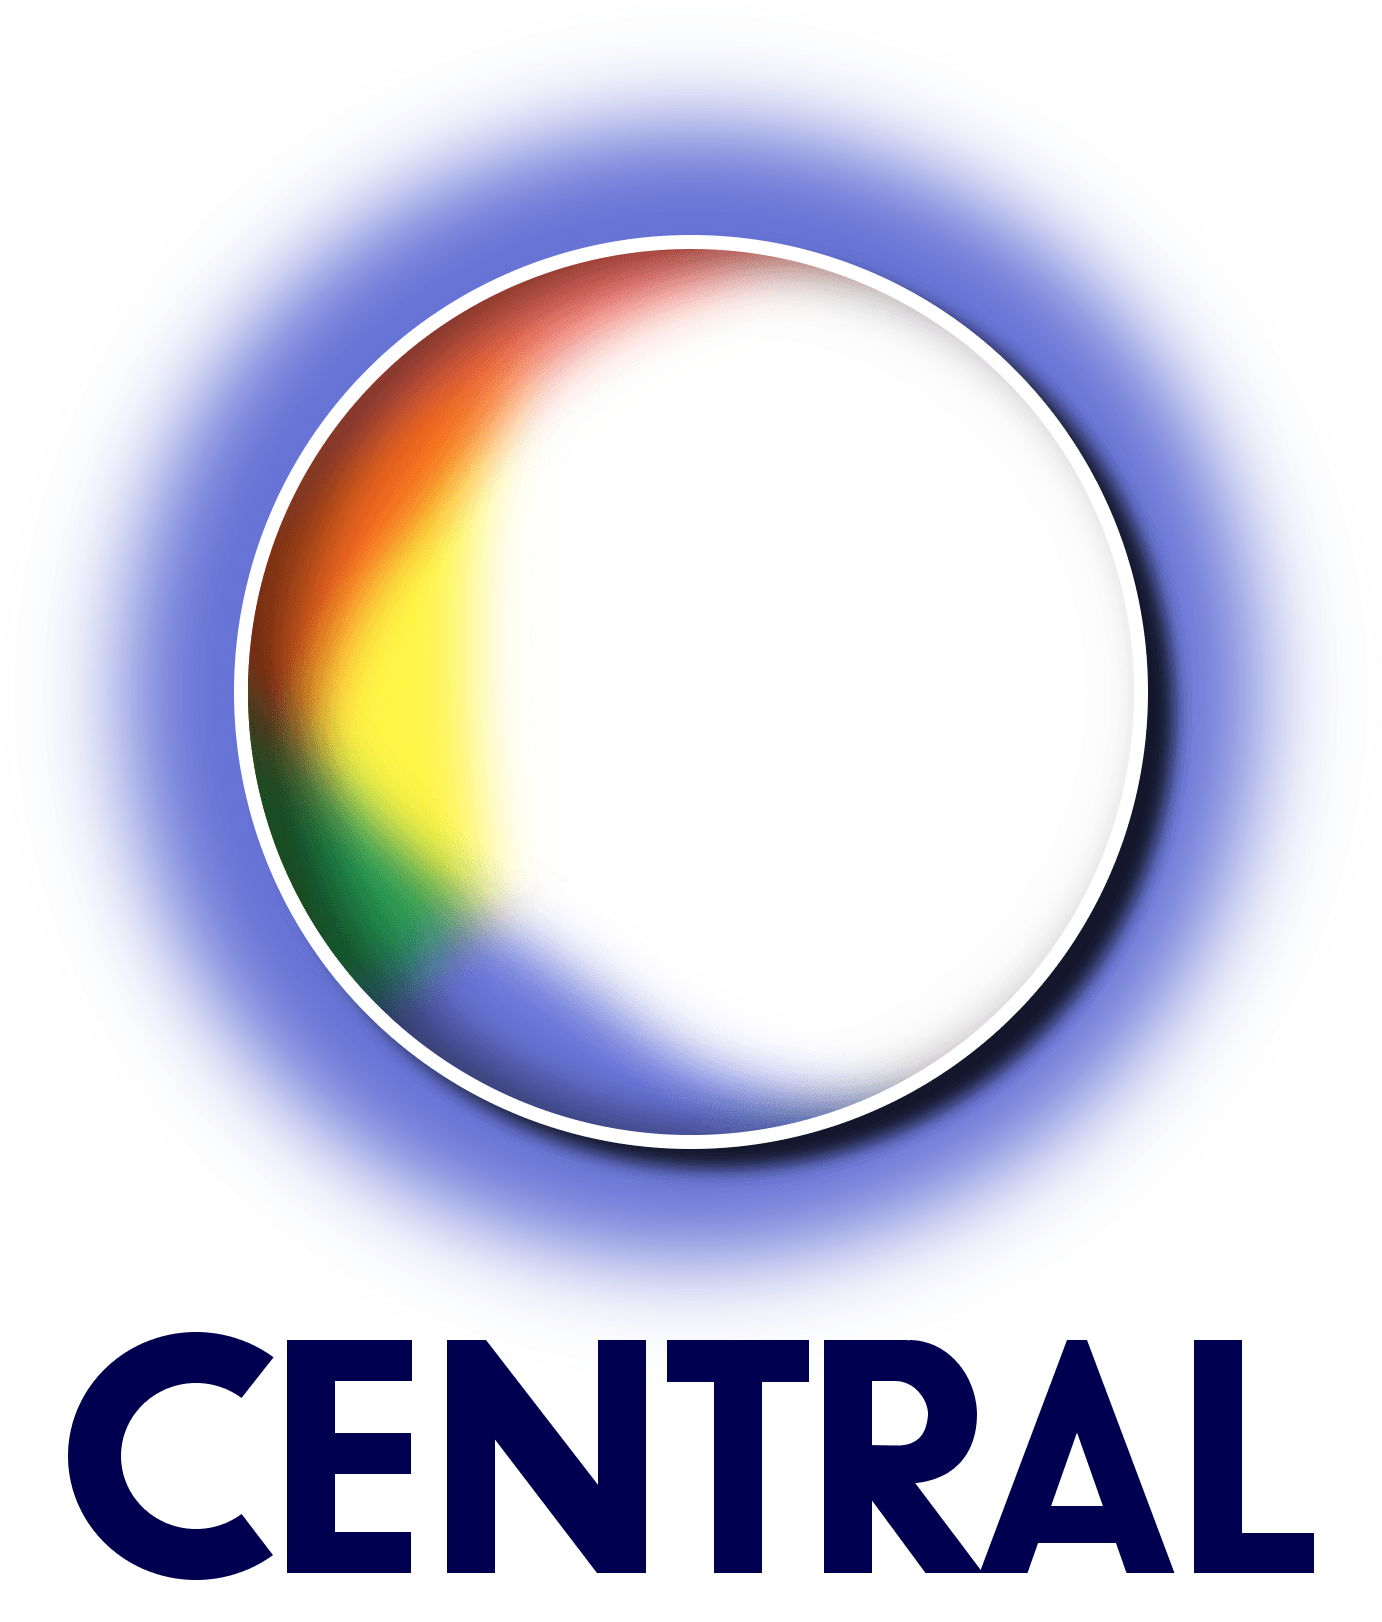 Central Logo - ITV Central | Logopedia 3: The Pantom Wikia | FANDOM powered by Wikia